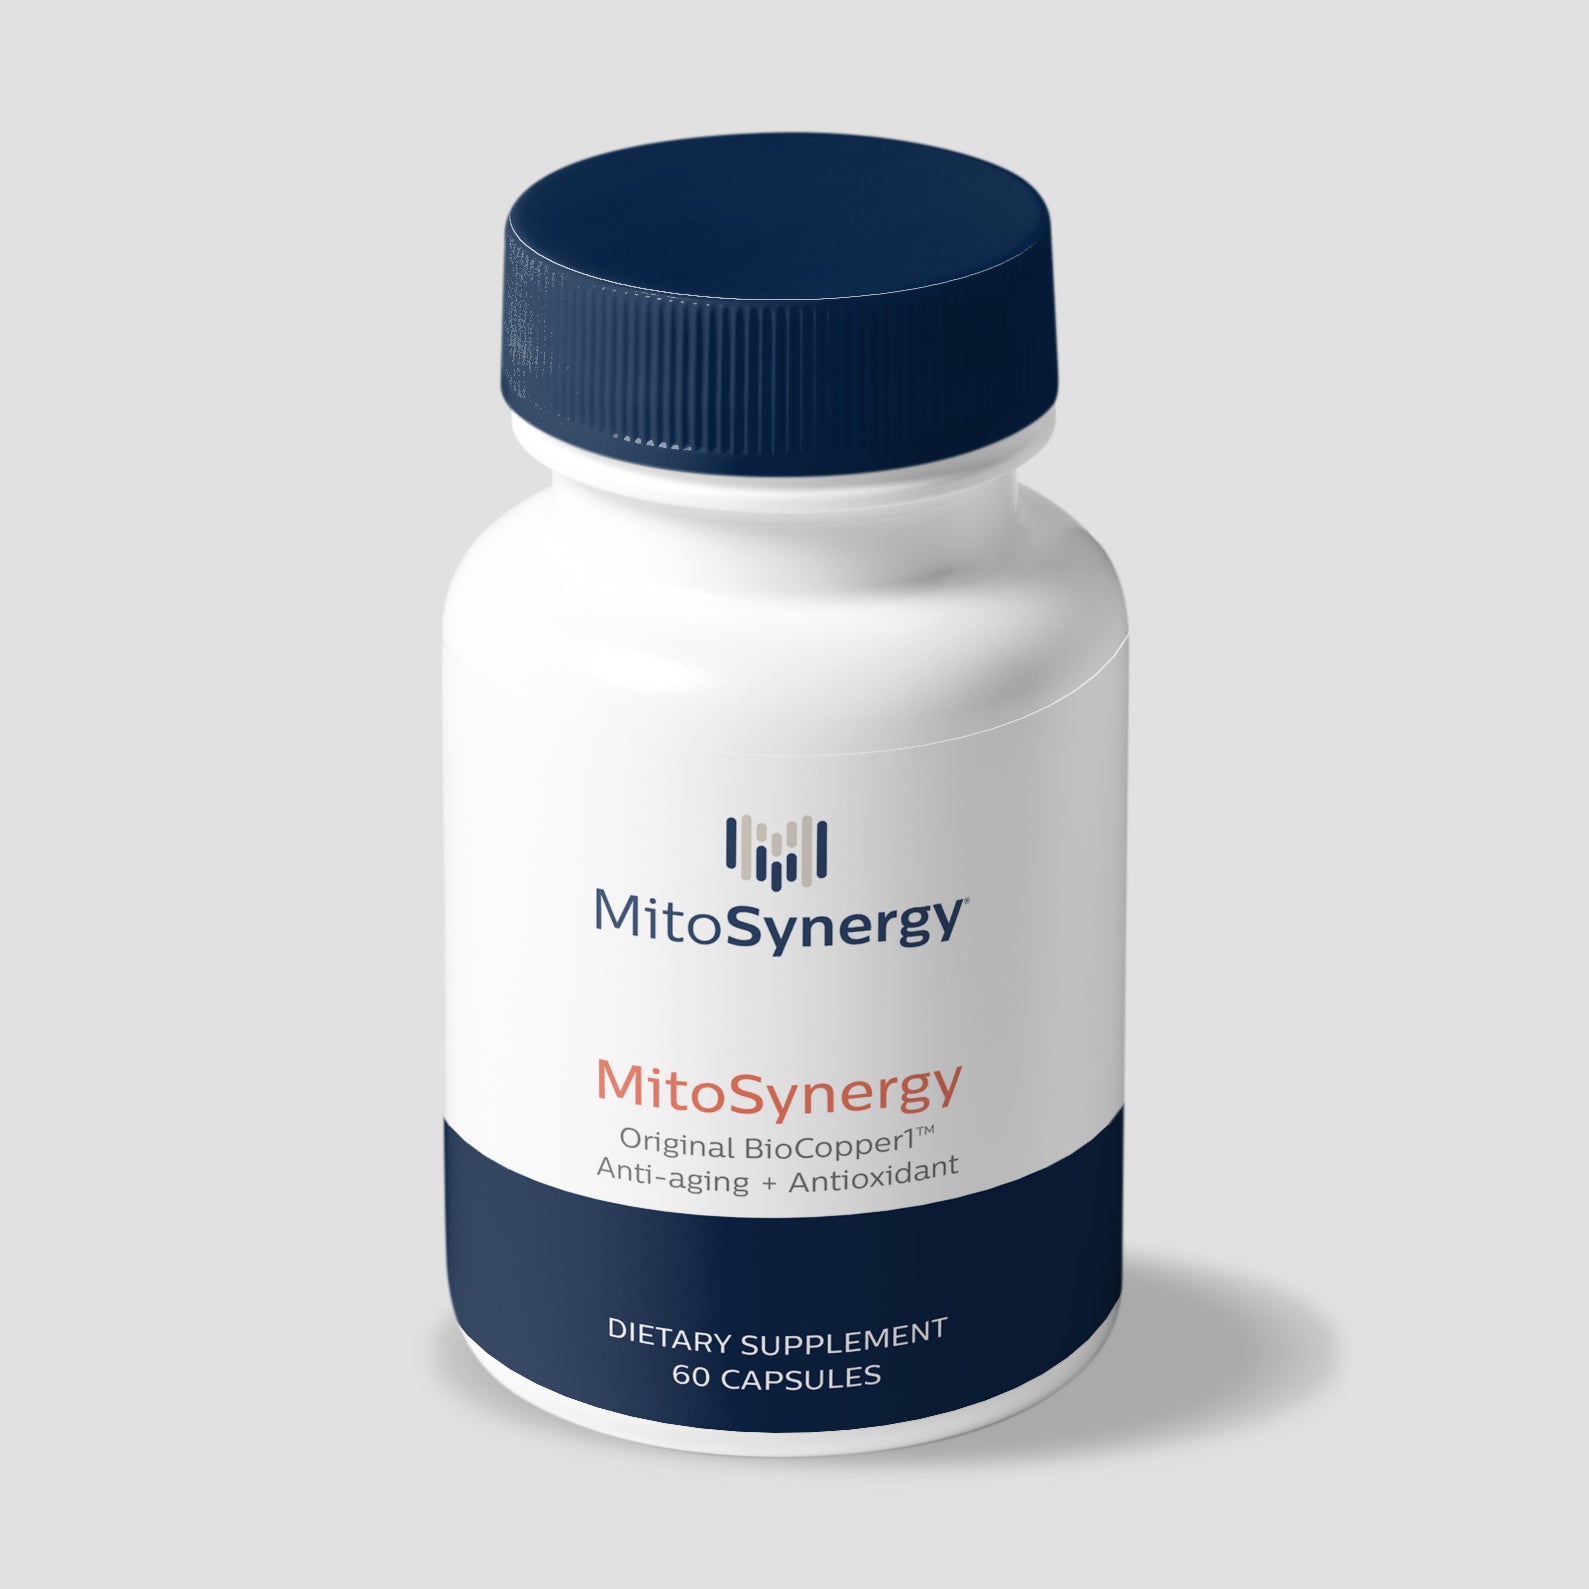 MitoSynergy Original Formula with BioCopper1 (Cunermuspir)